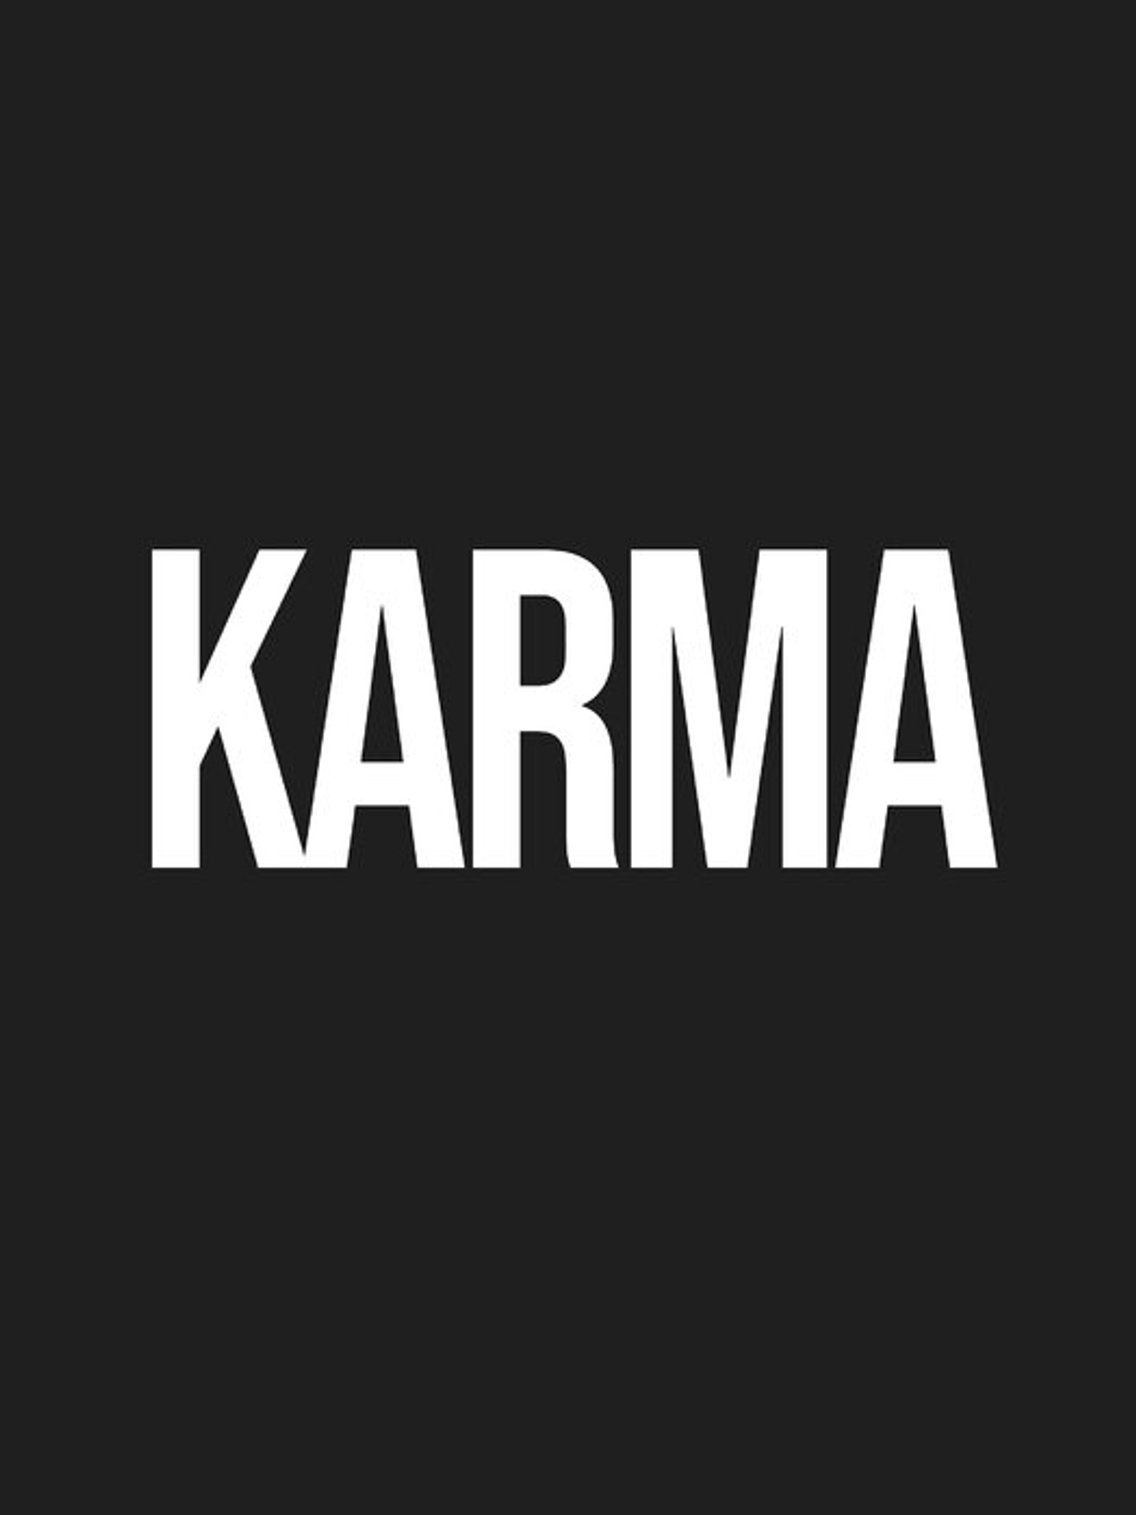 “Karma’s a Bitch Challenge Peru.” - Cover Image